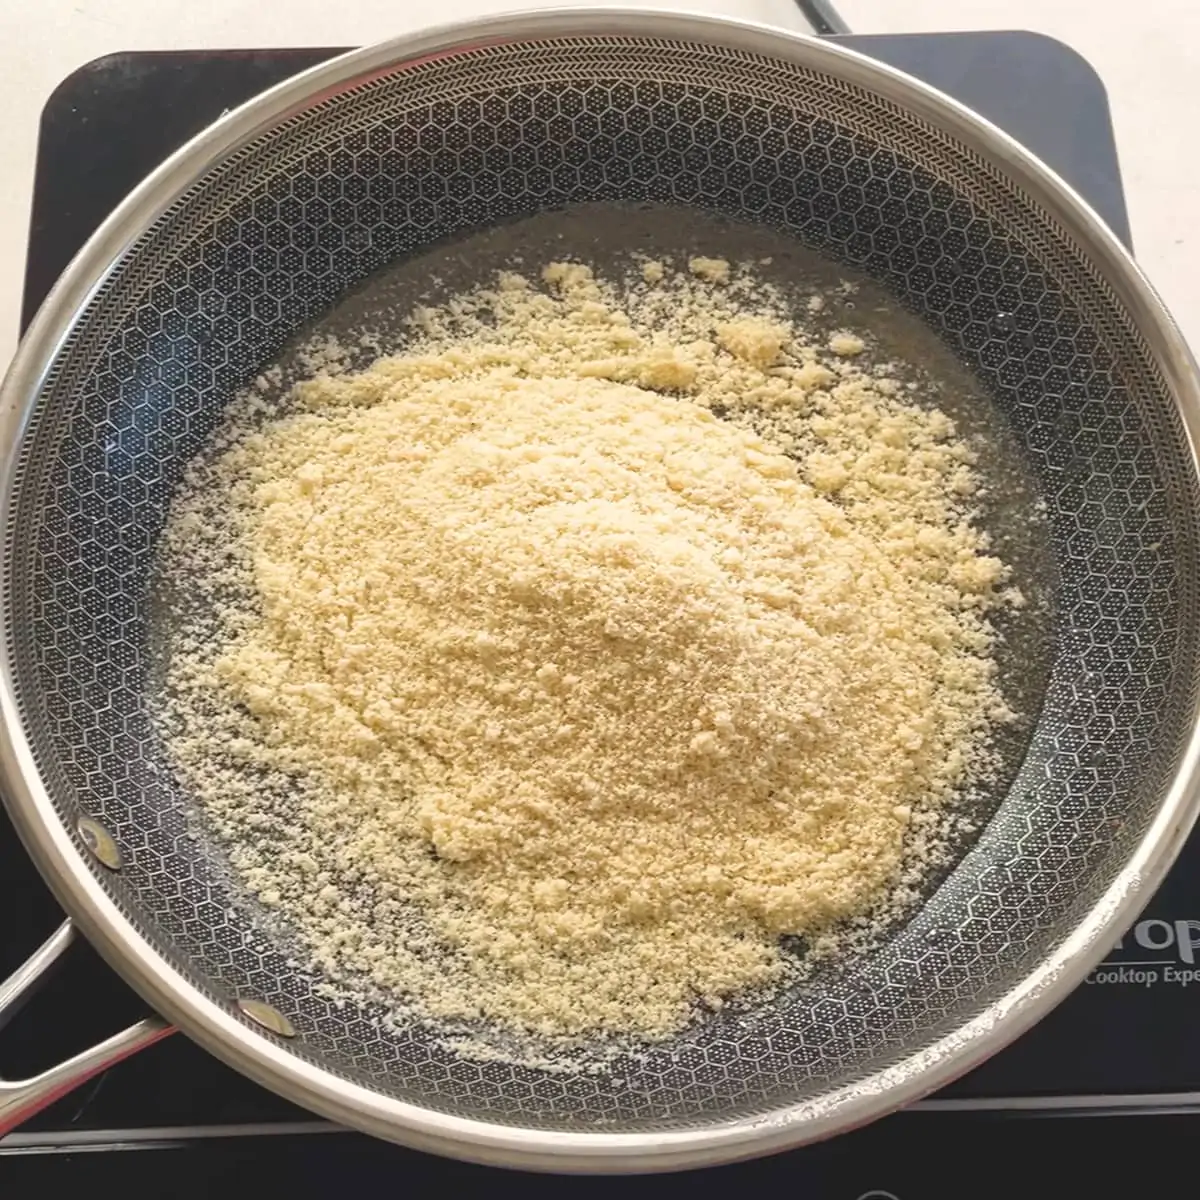 Add Almond flour to the pan